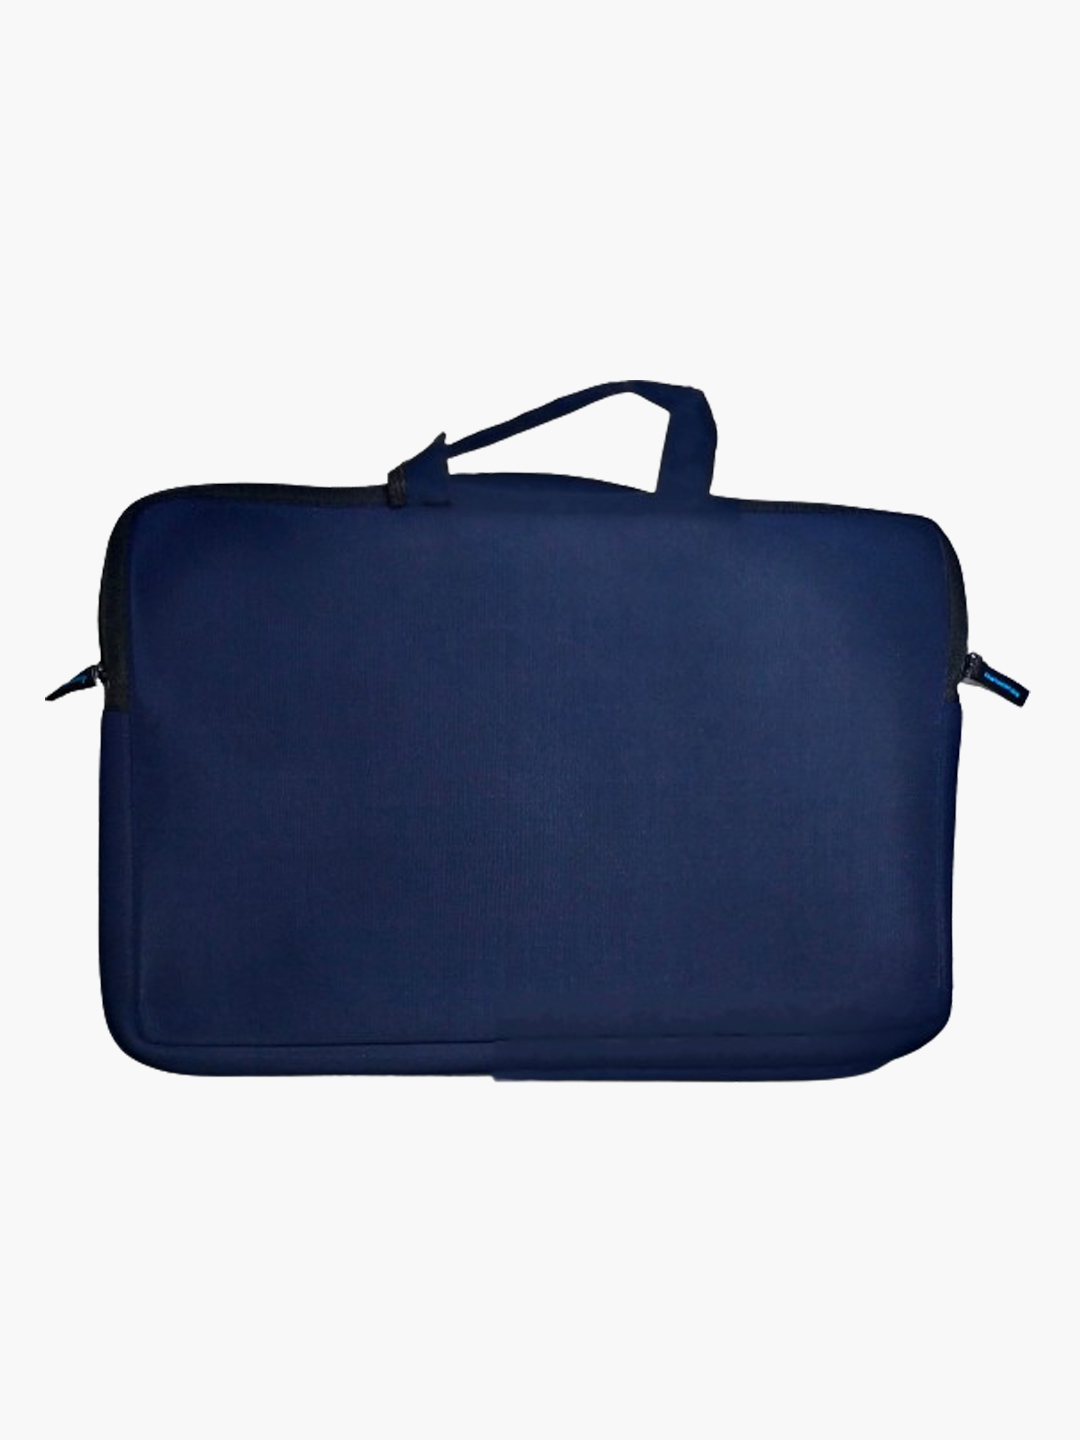 Laptop Bag Blue 2.jpg